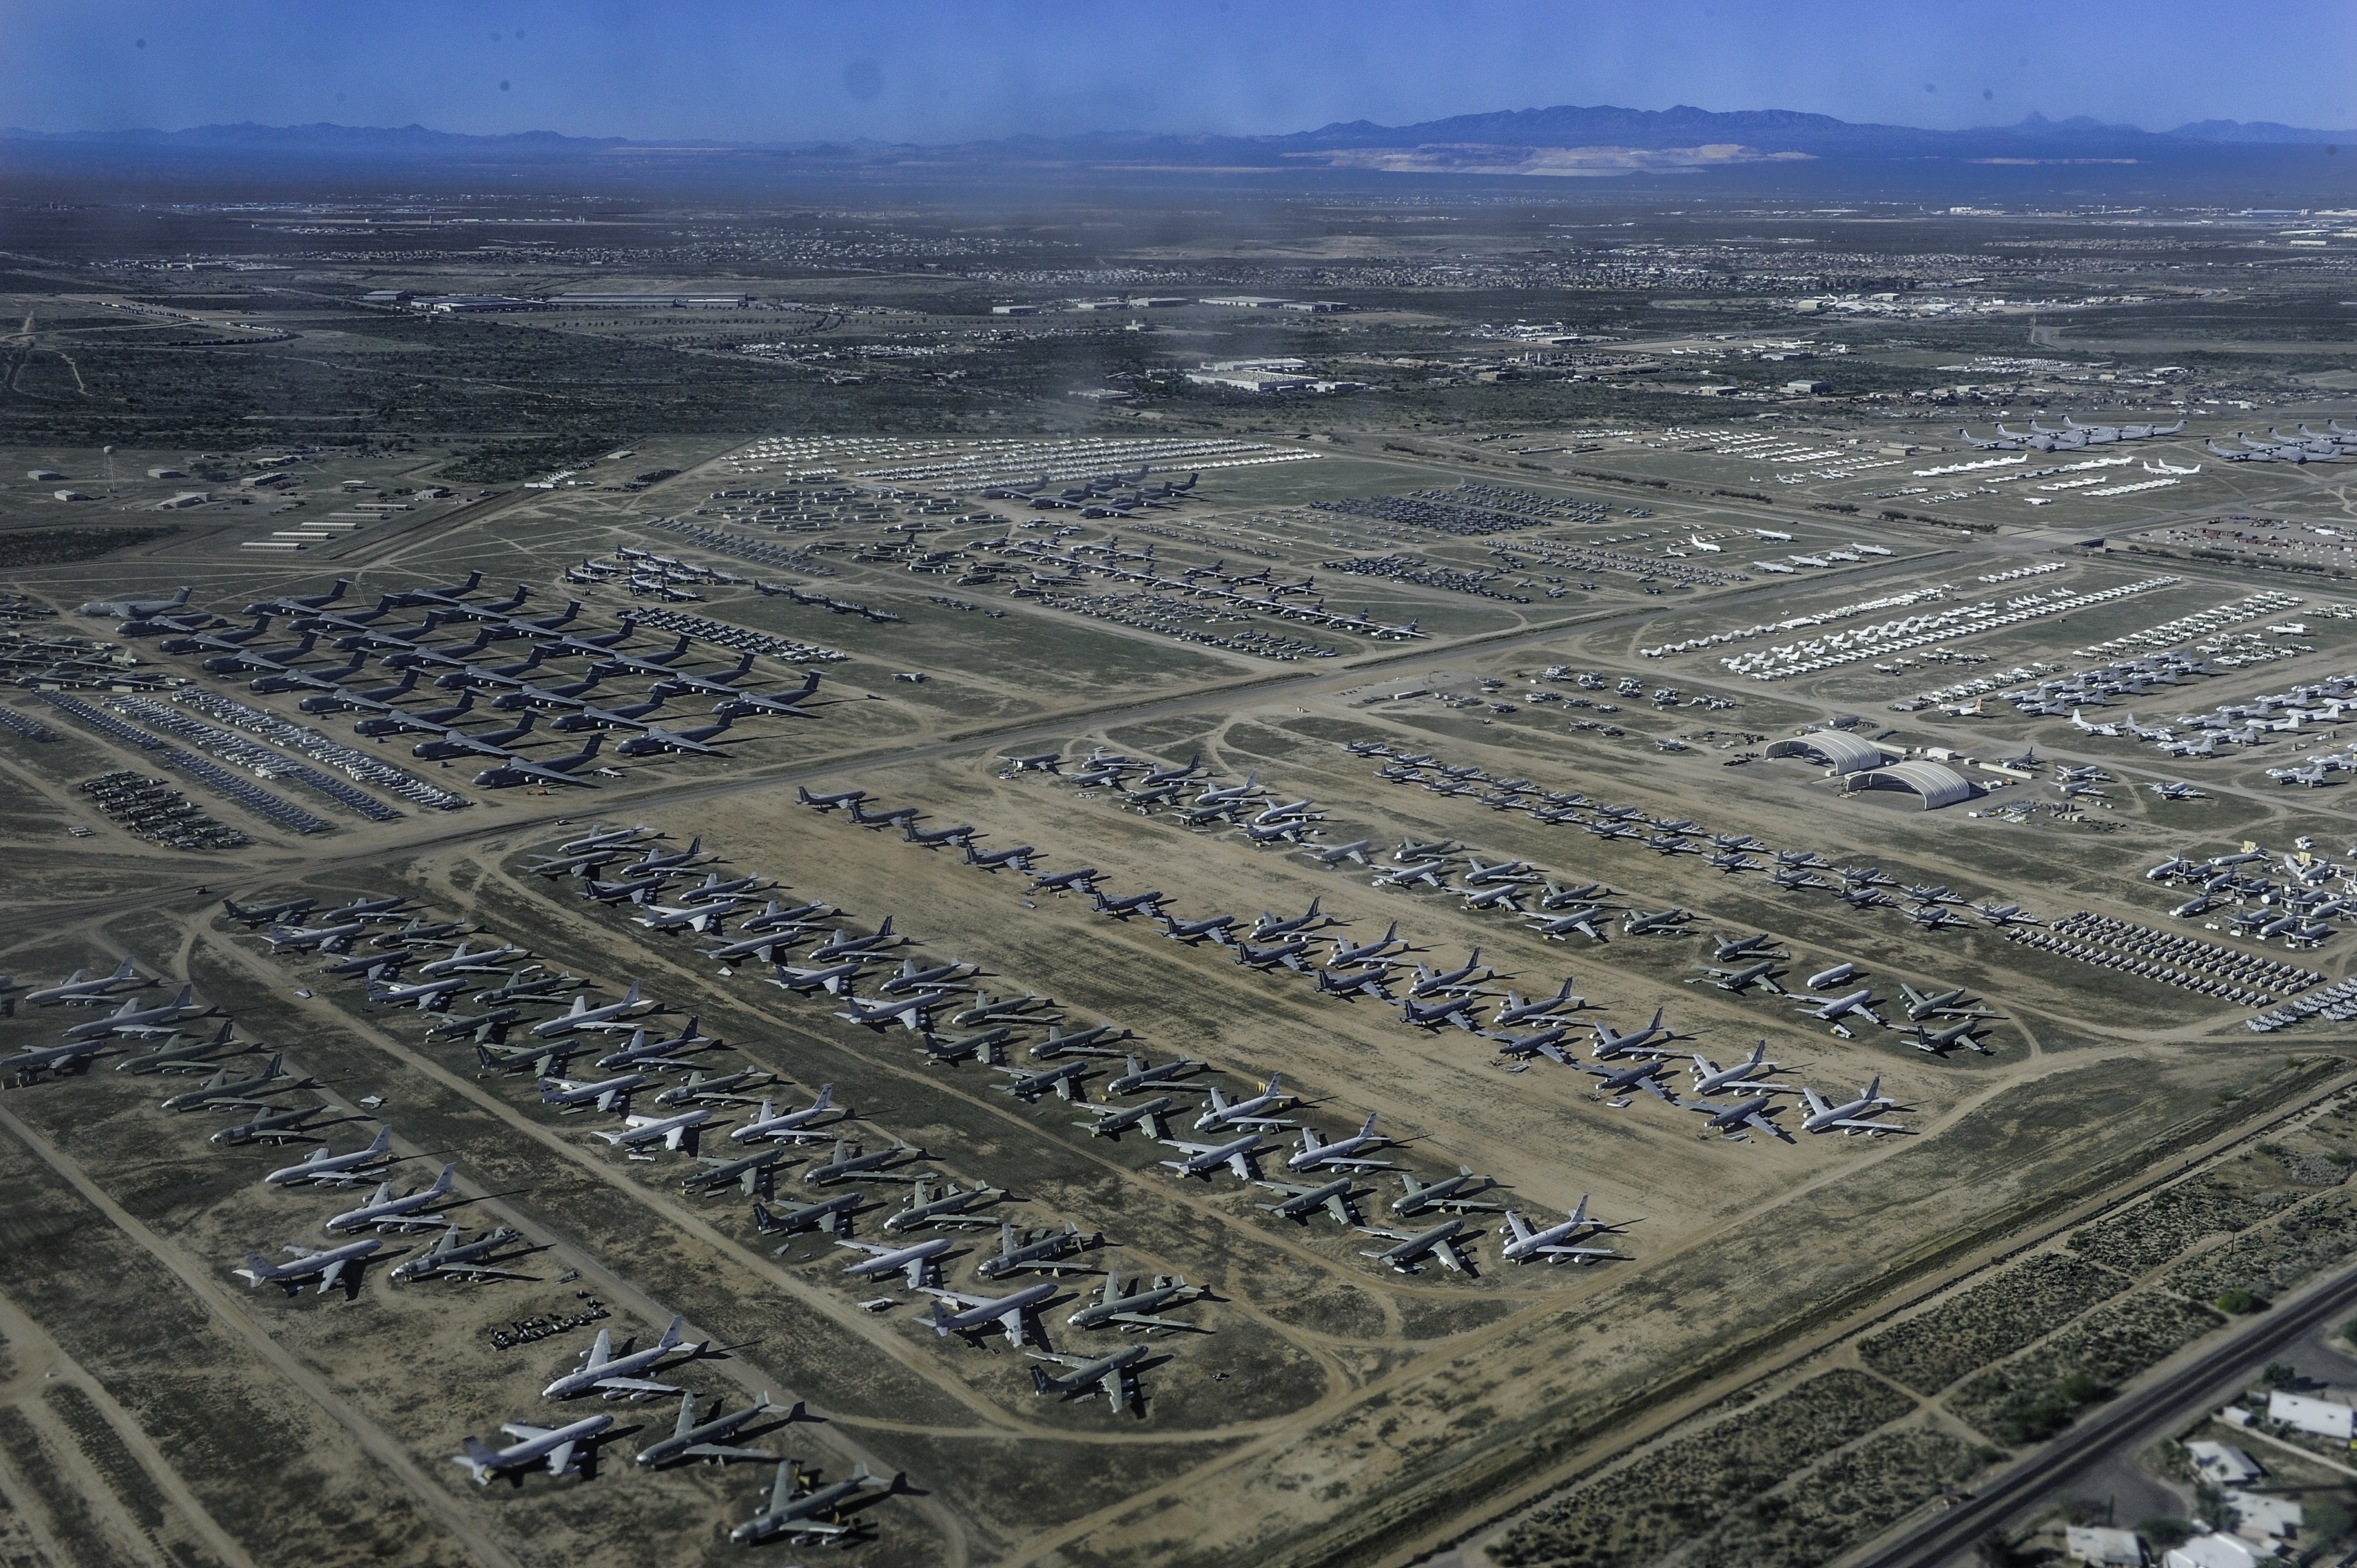 309th Aerospace Maintenance and Regeneration Group at Davis-Montham AFB in Tucson, Arizona